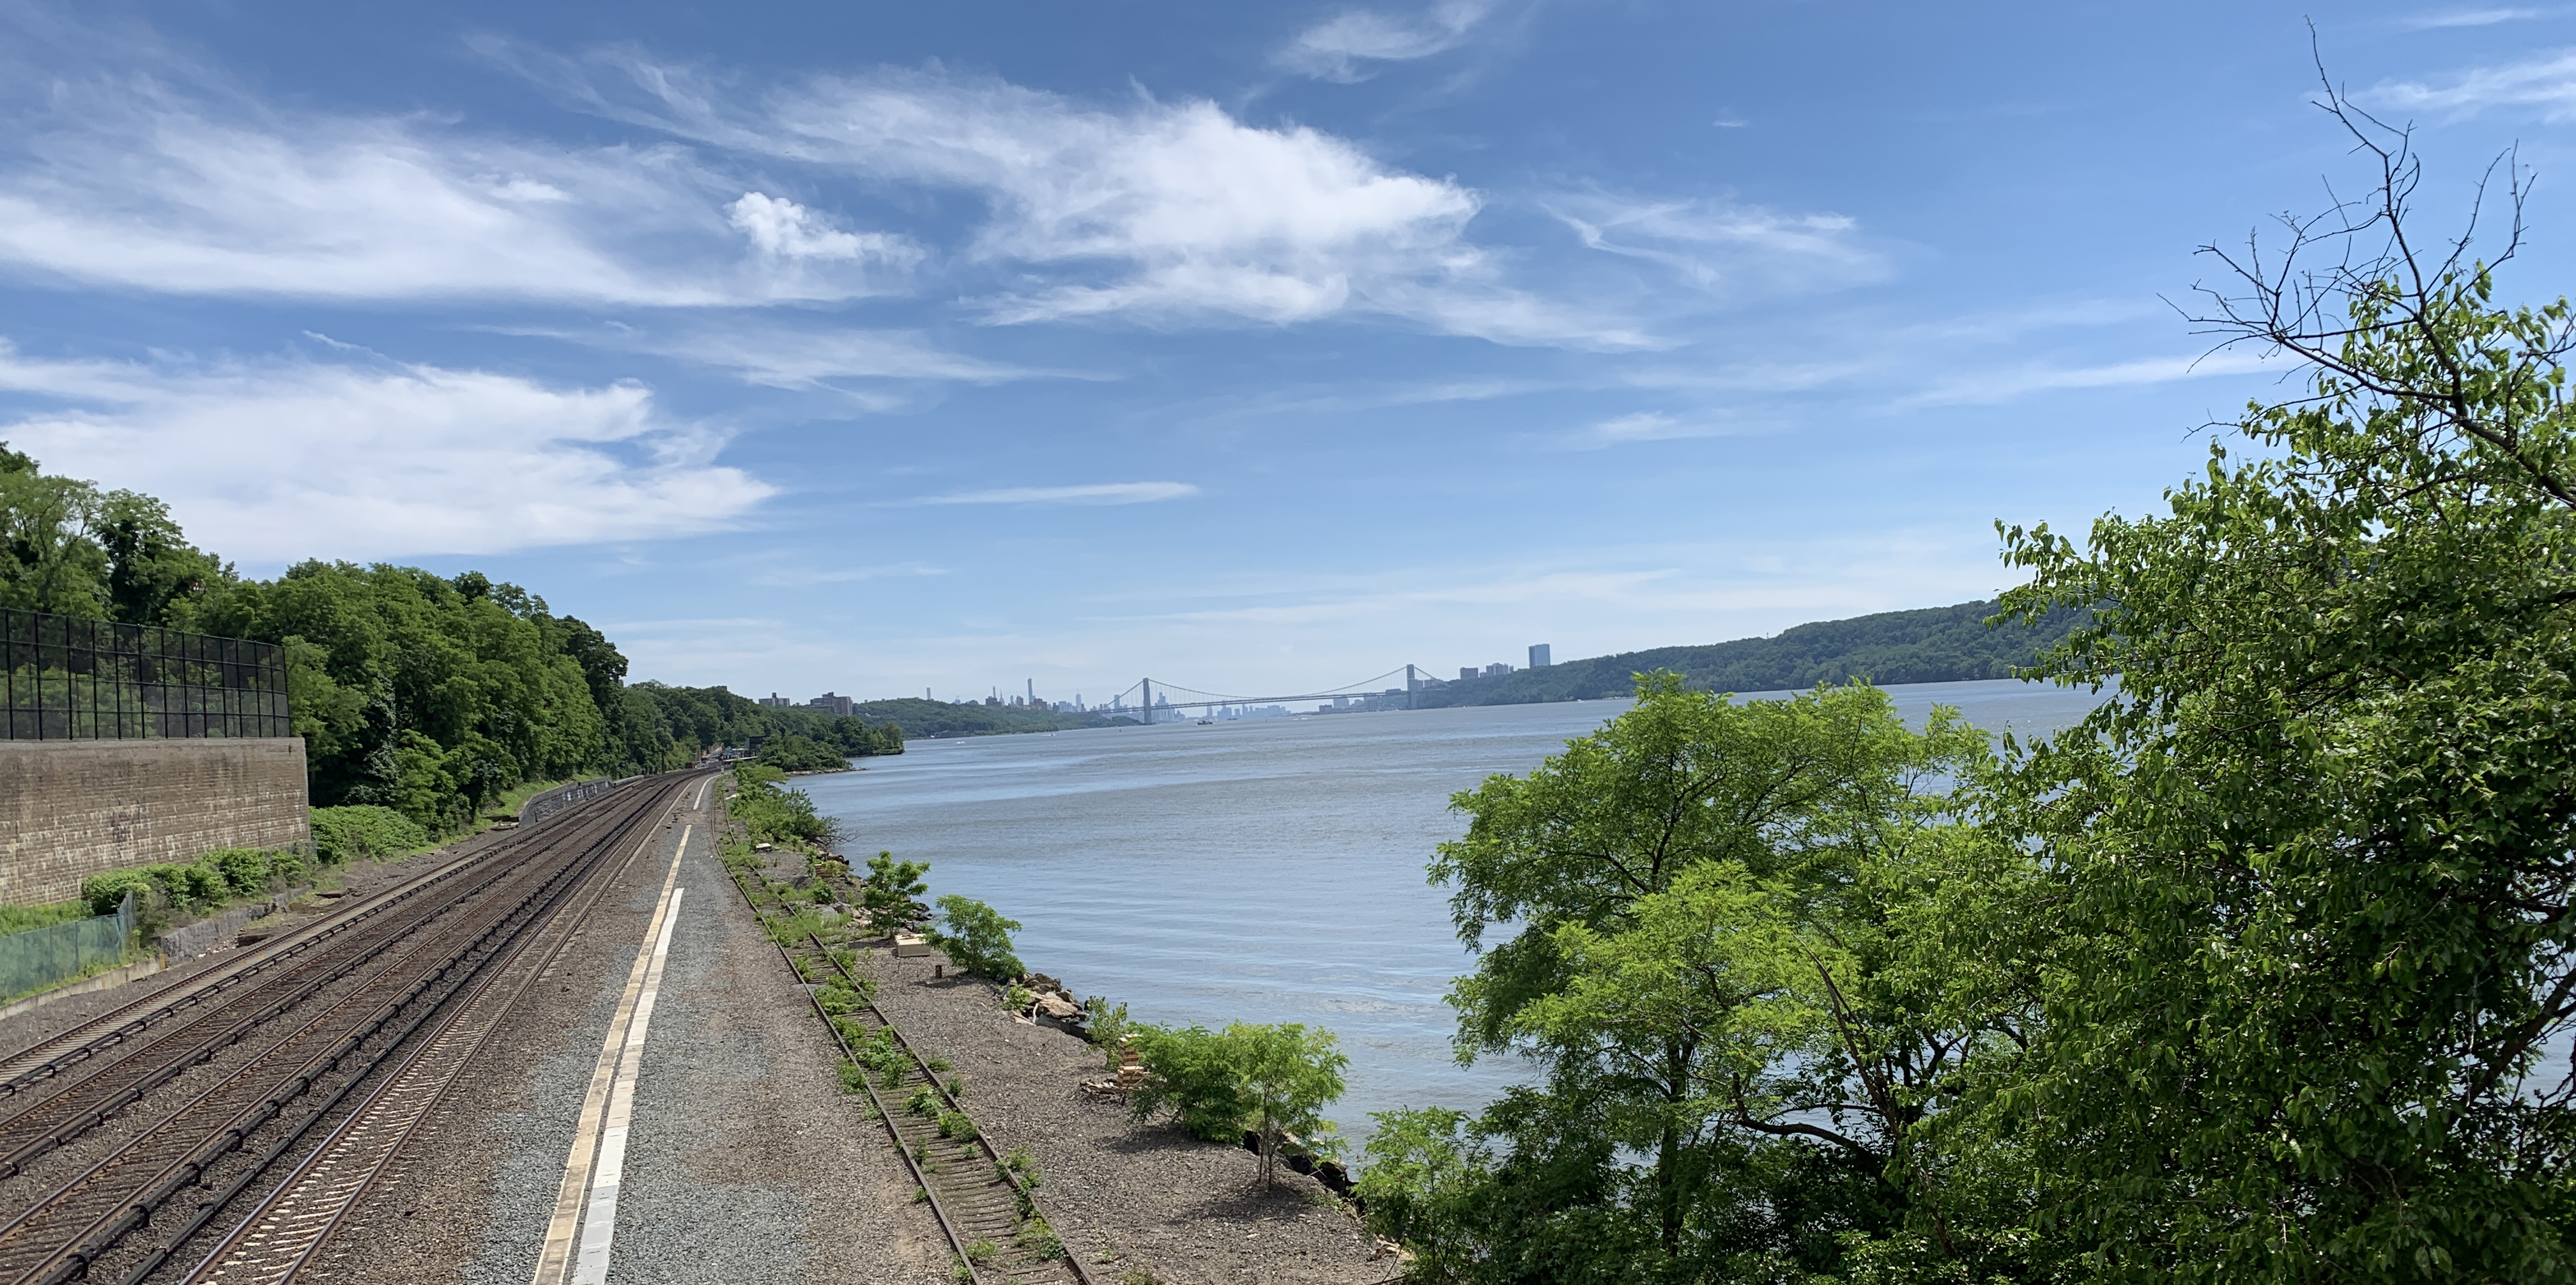 Hudson River Greenway - Before